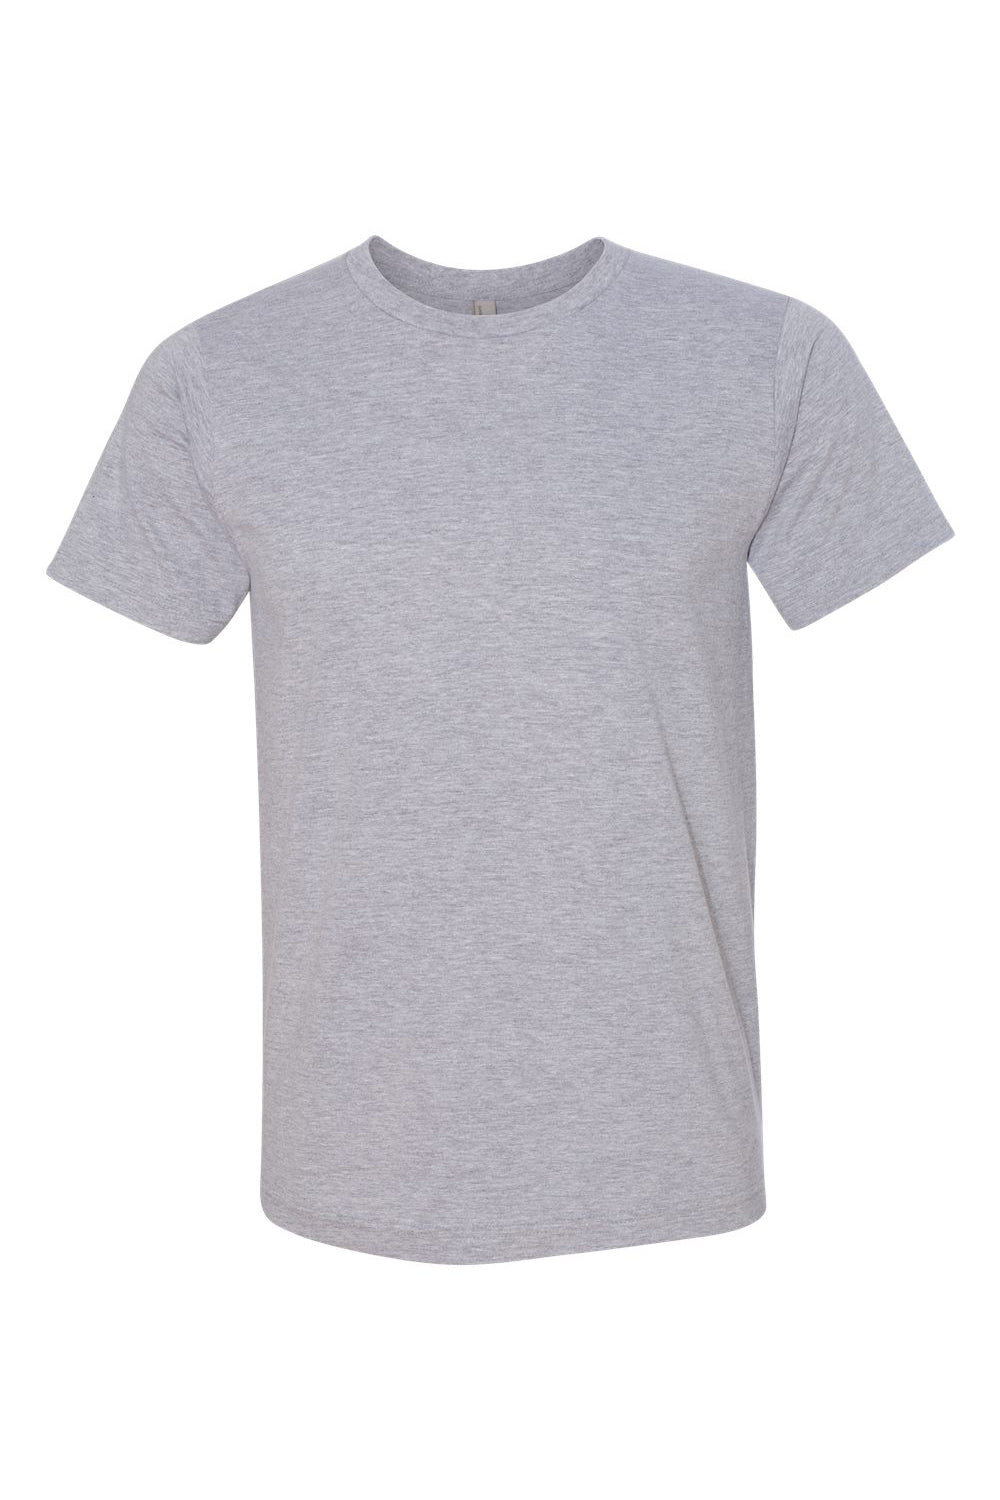 Bayside 5010 Mens USA Made Short Sleeve Crewneck T-Shirt Heather Grey Flat Front